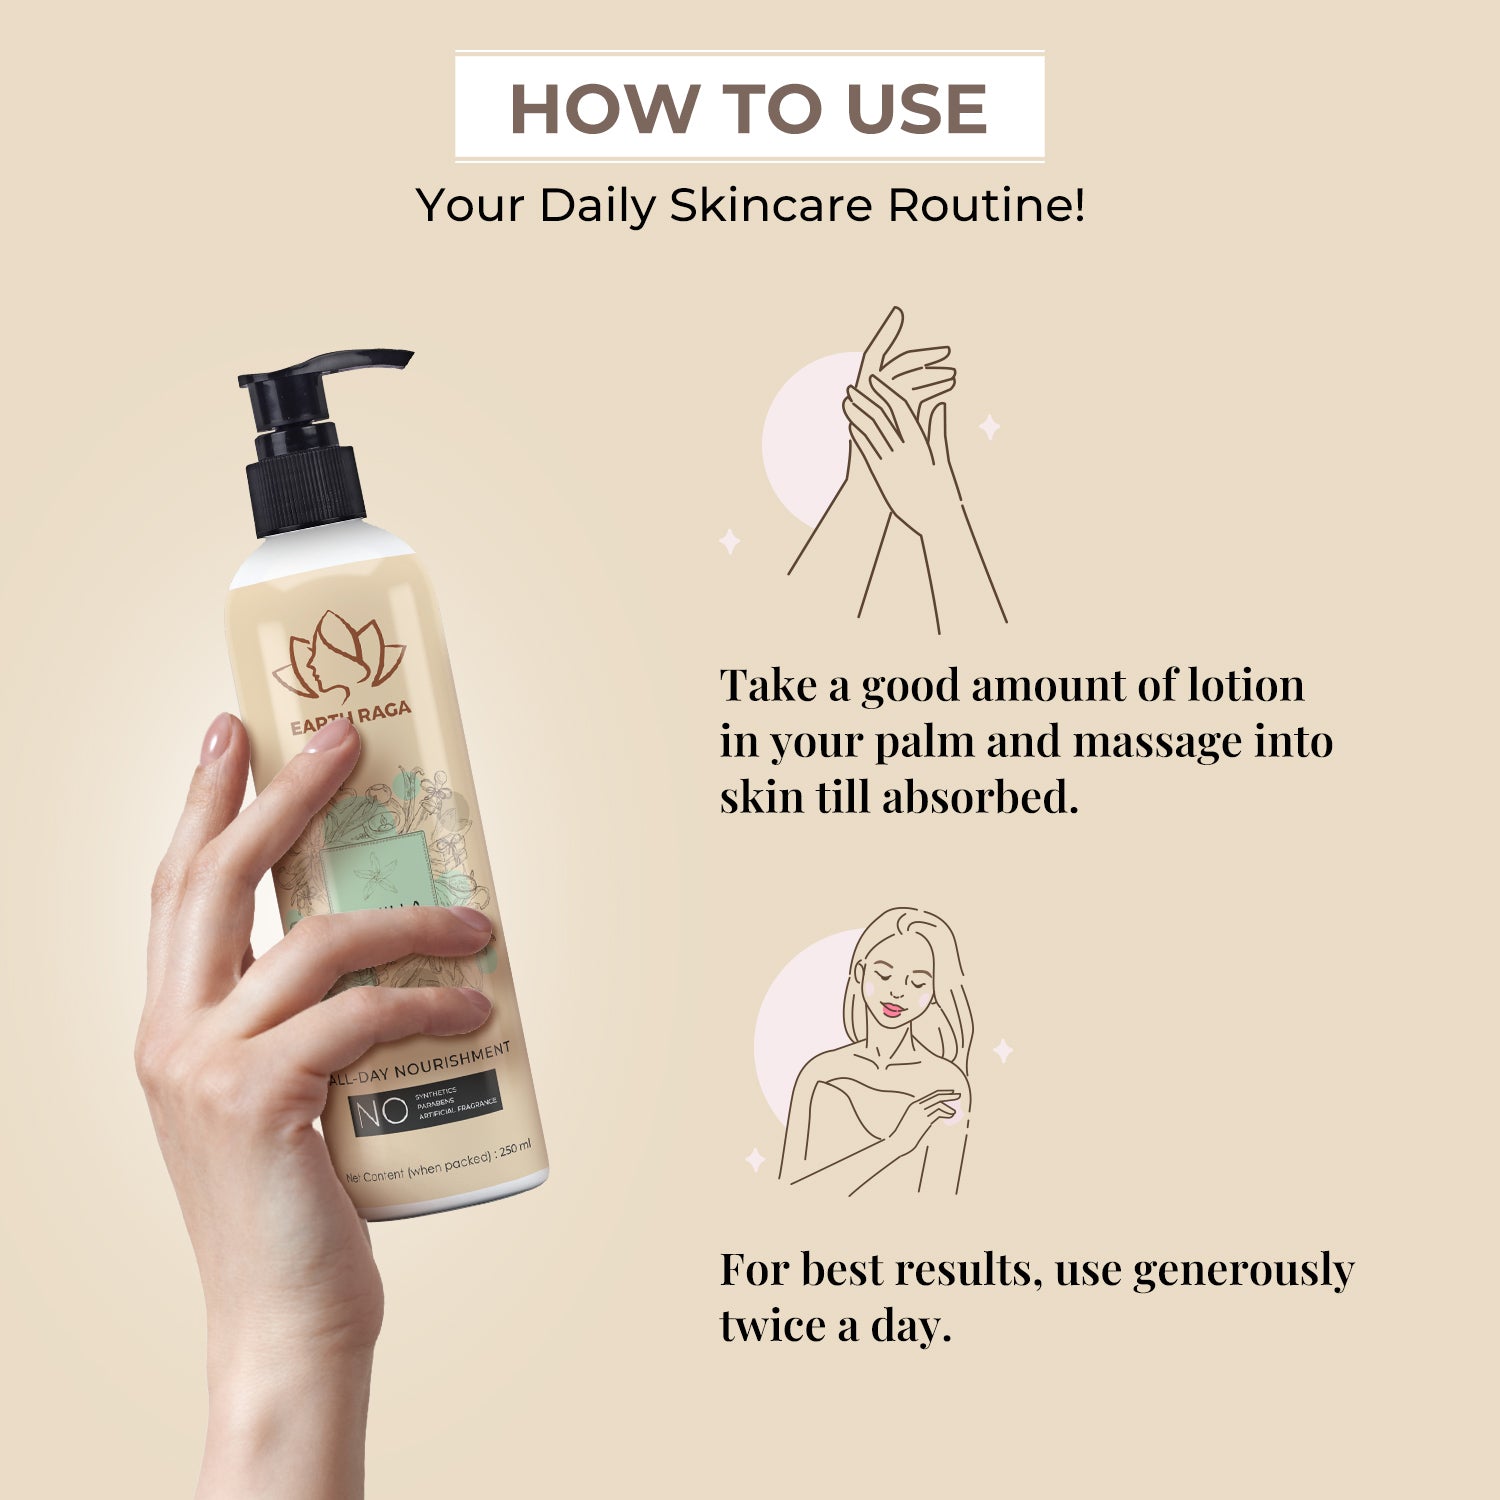 Anti Hairfall Shampoo and Vanilla Body Lotion Combo (250 ml +250 ml) - Ultimate Deal